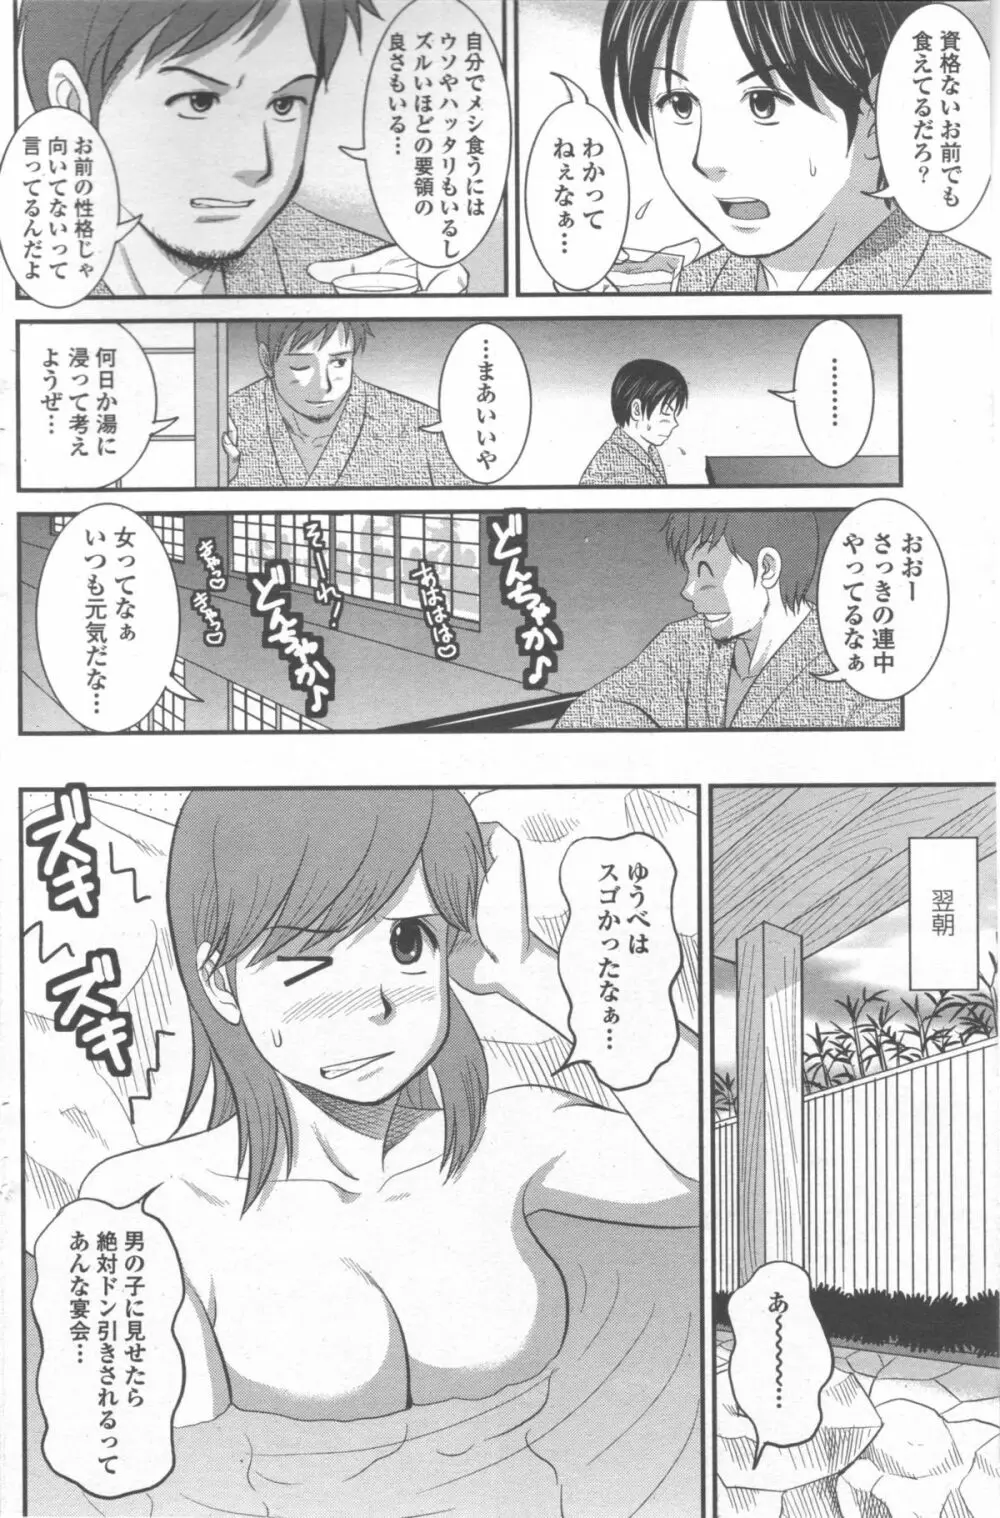 Haken no Muuko-san 9 7ページ